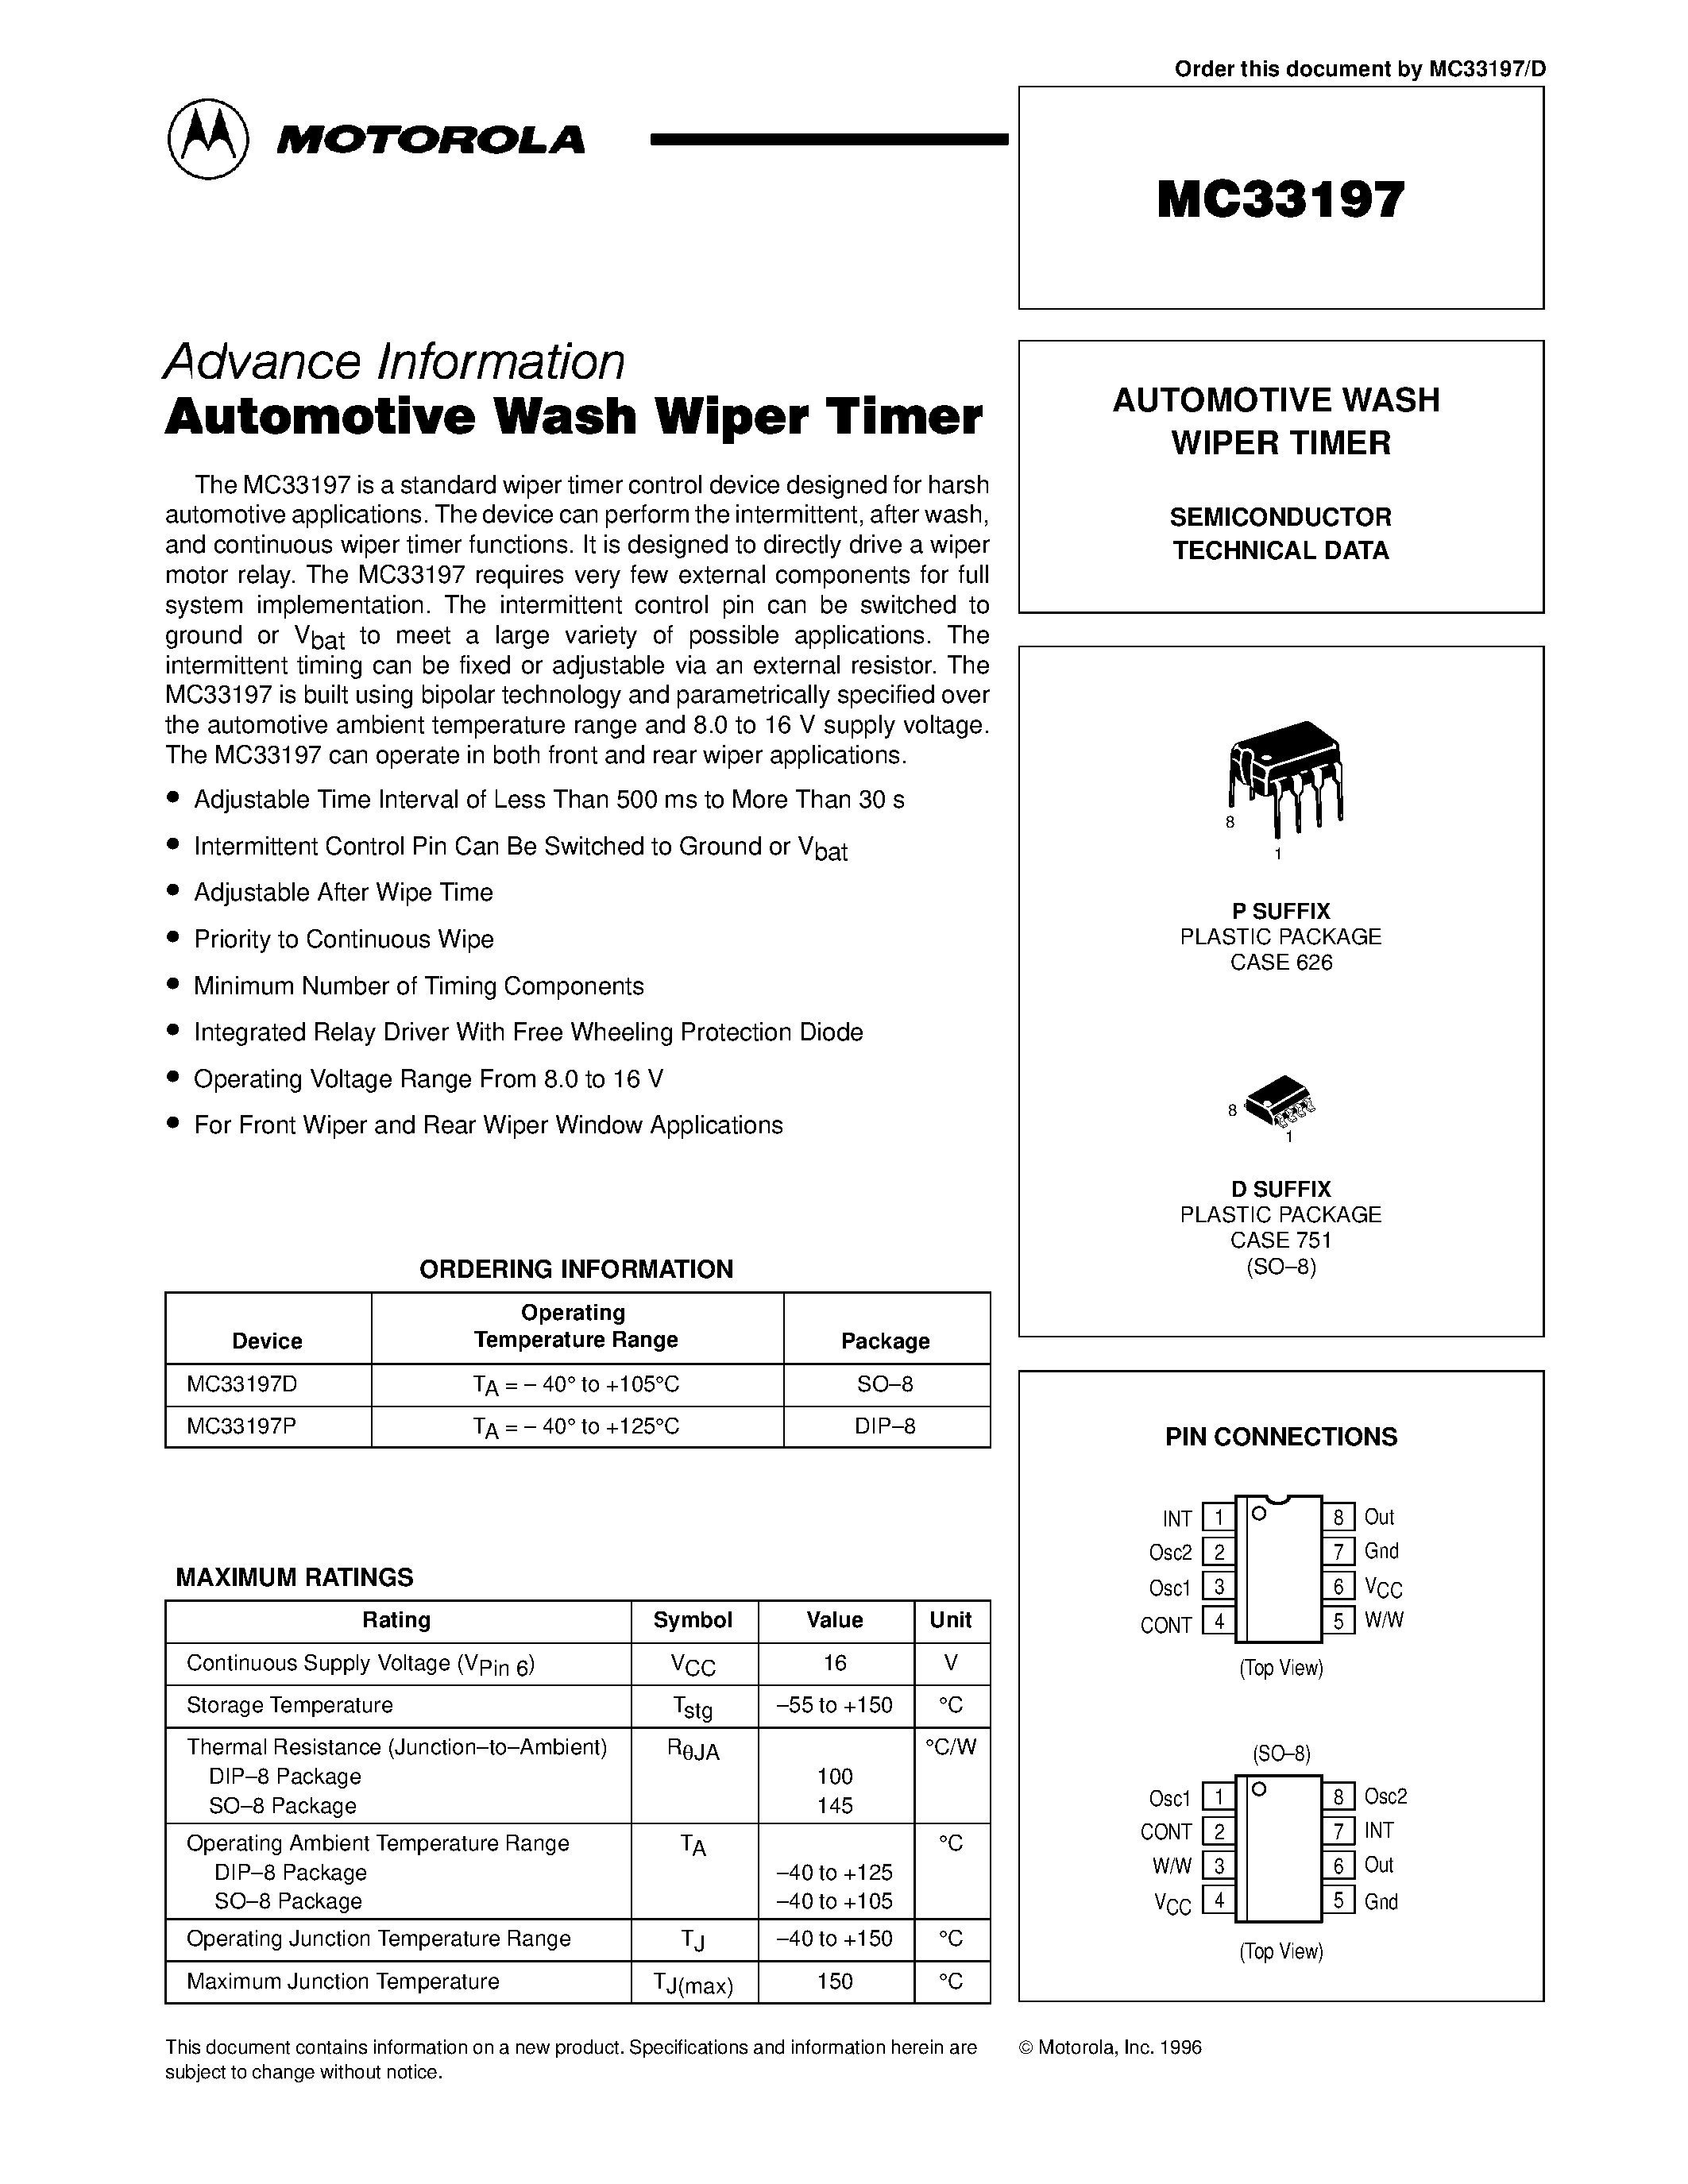 Datasheet MC33197 - AUTOMOTIVE WASH WIPER TIMER page 1